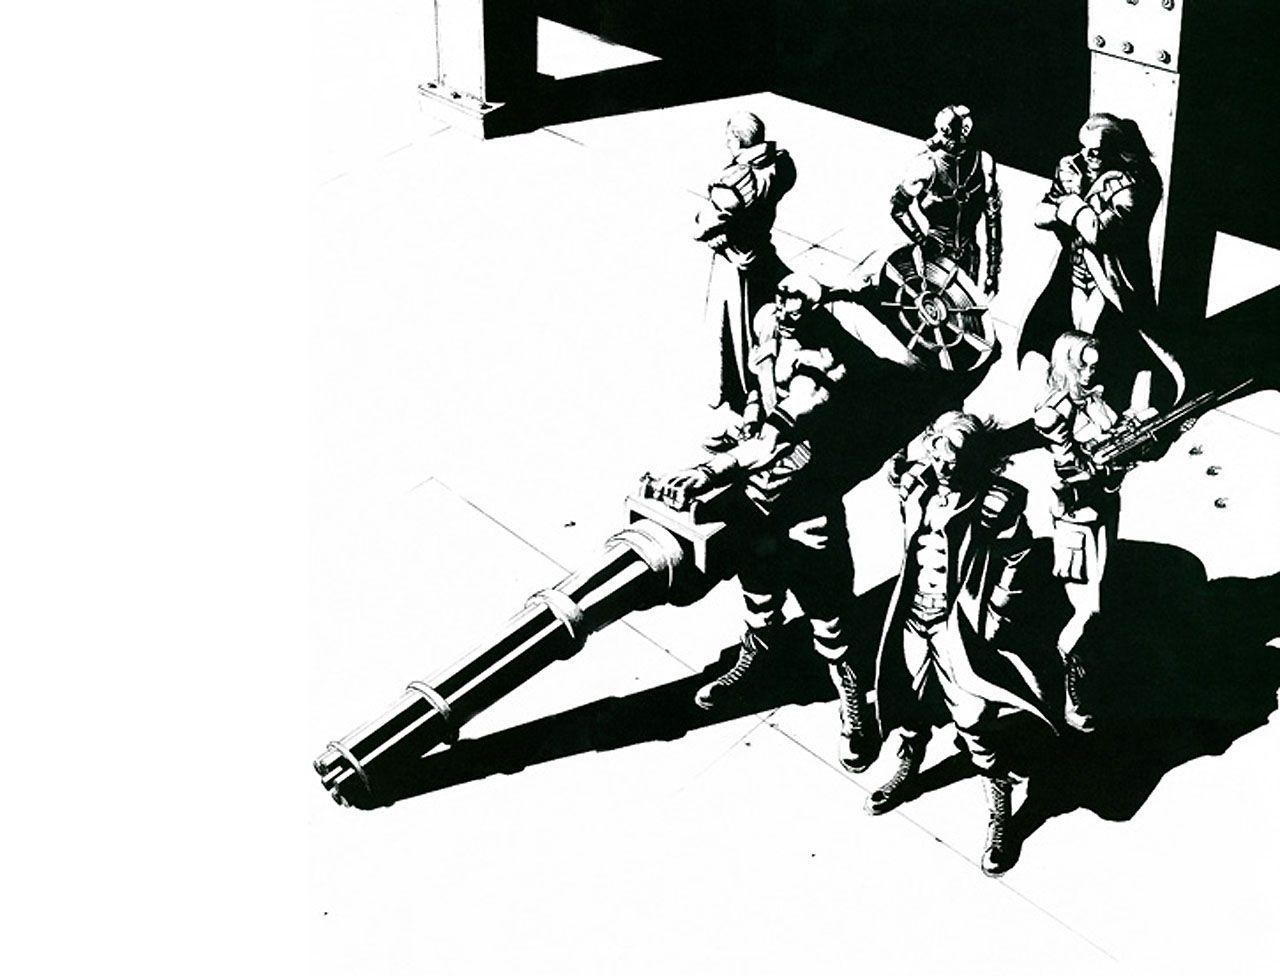 Metal Gear Solid 4 wallpaper. Arte e Design. Metal